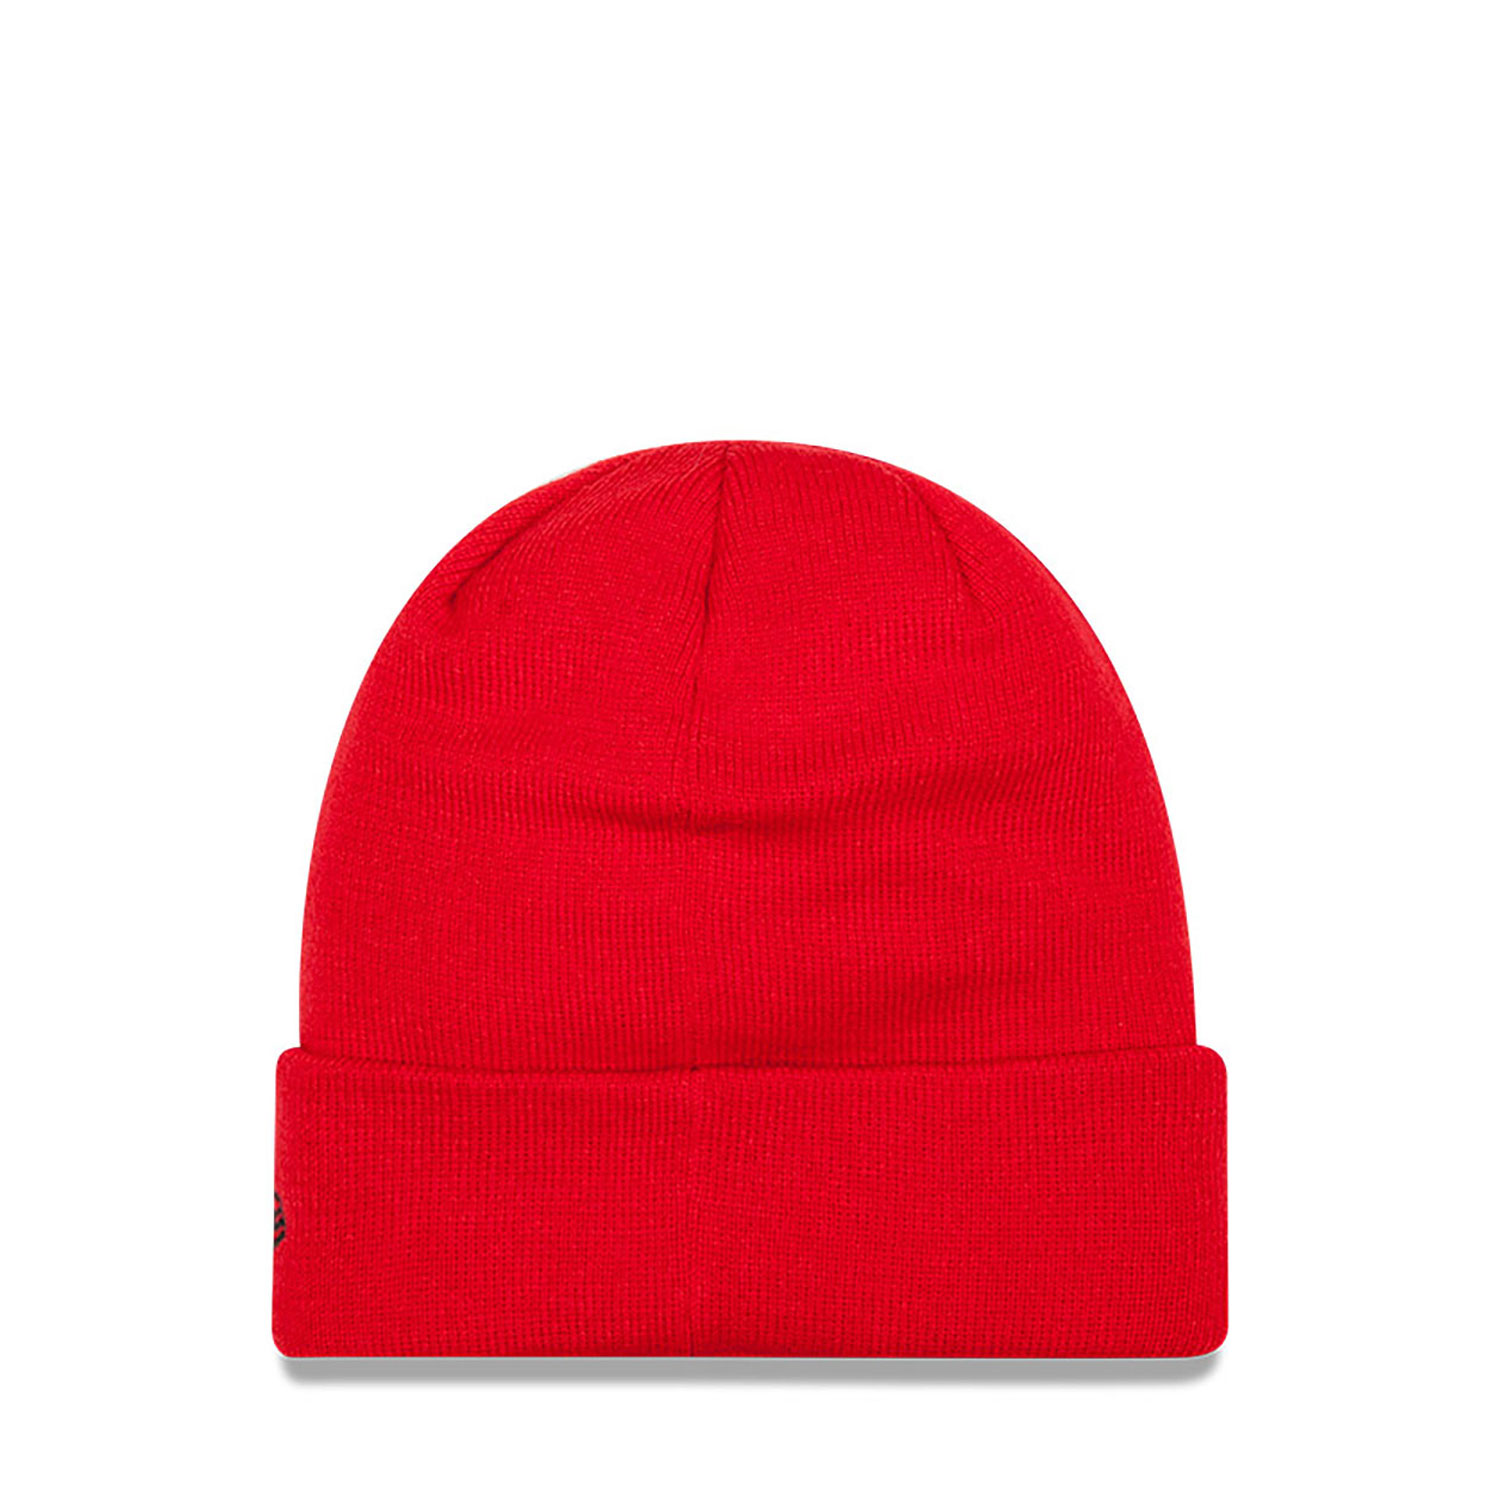 Manchester United FC Red Cuff Knit Beanie Hat